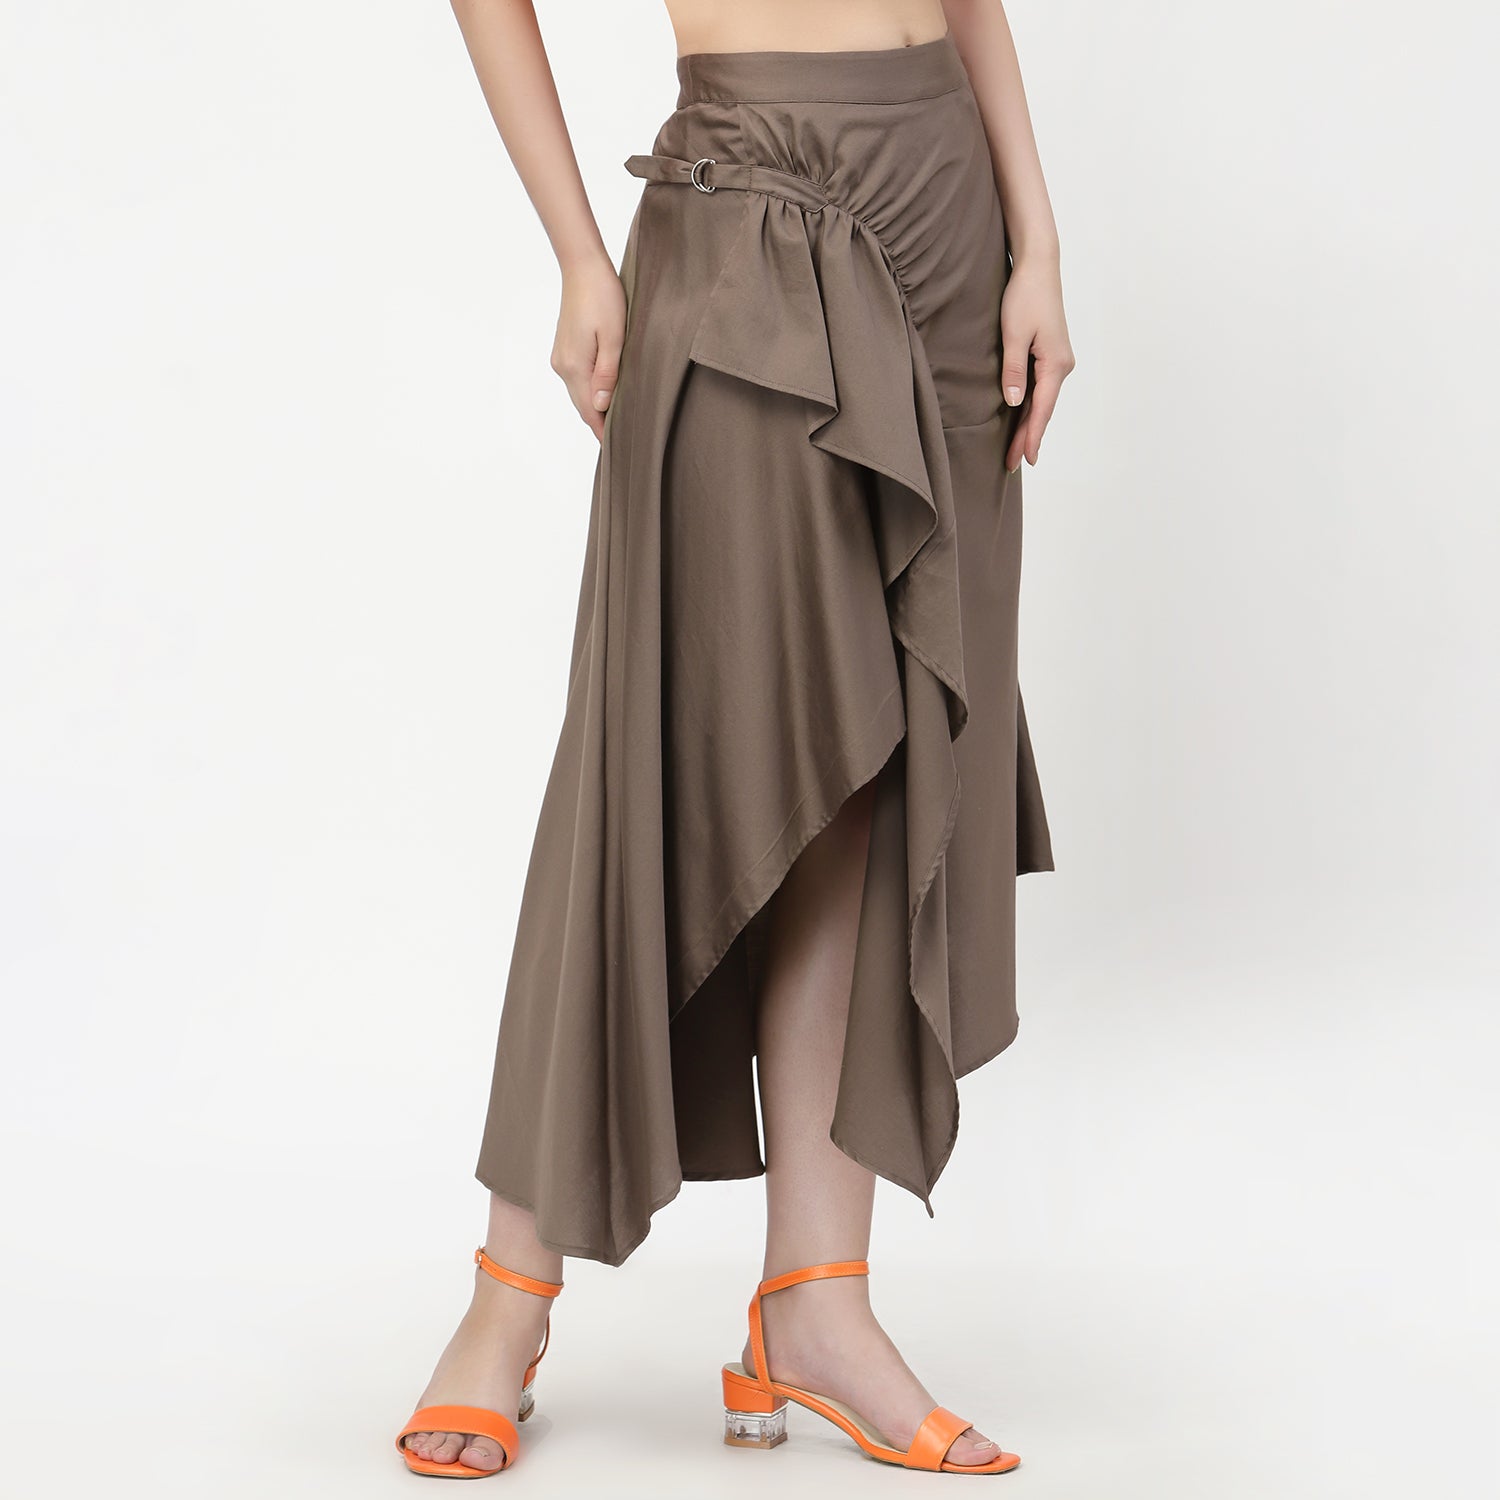 Dark Beige Asymmetrical Skirt With Buckles